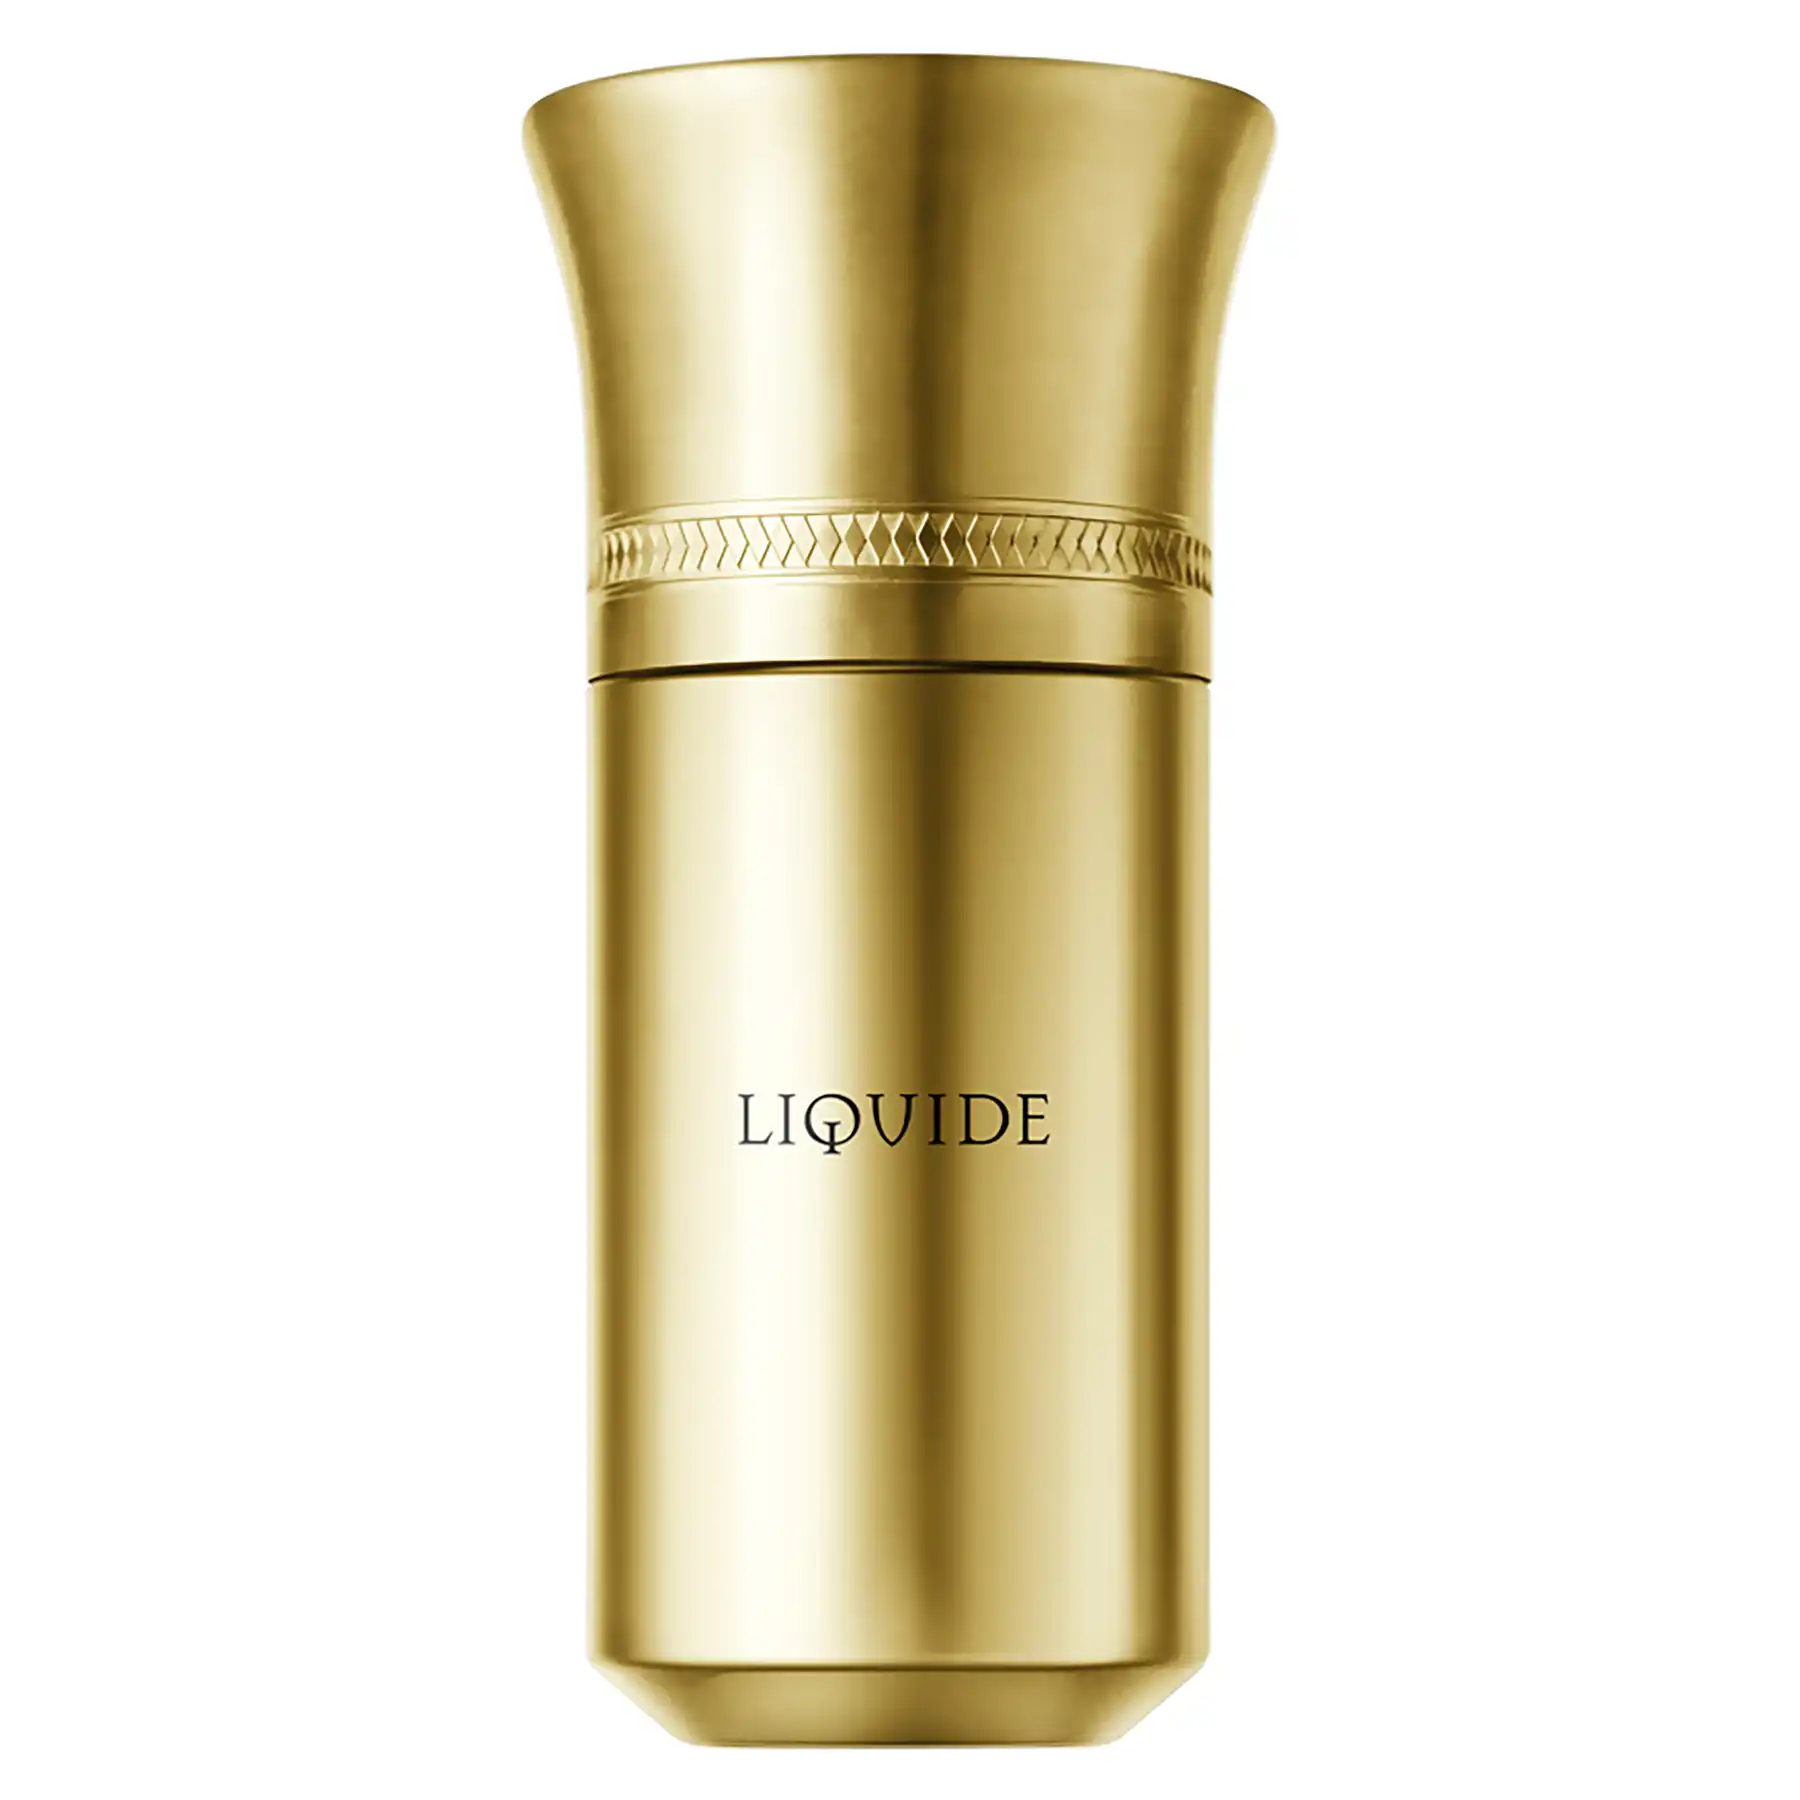 Liquide Imaginaires Liquide Gold Eau de Parfum 100ml